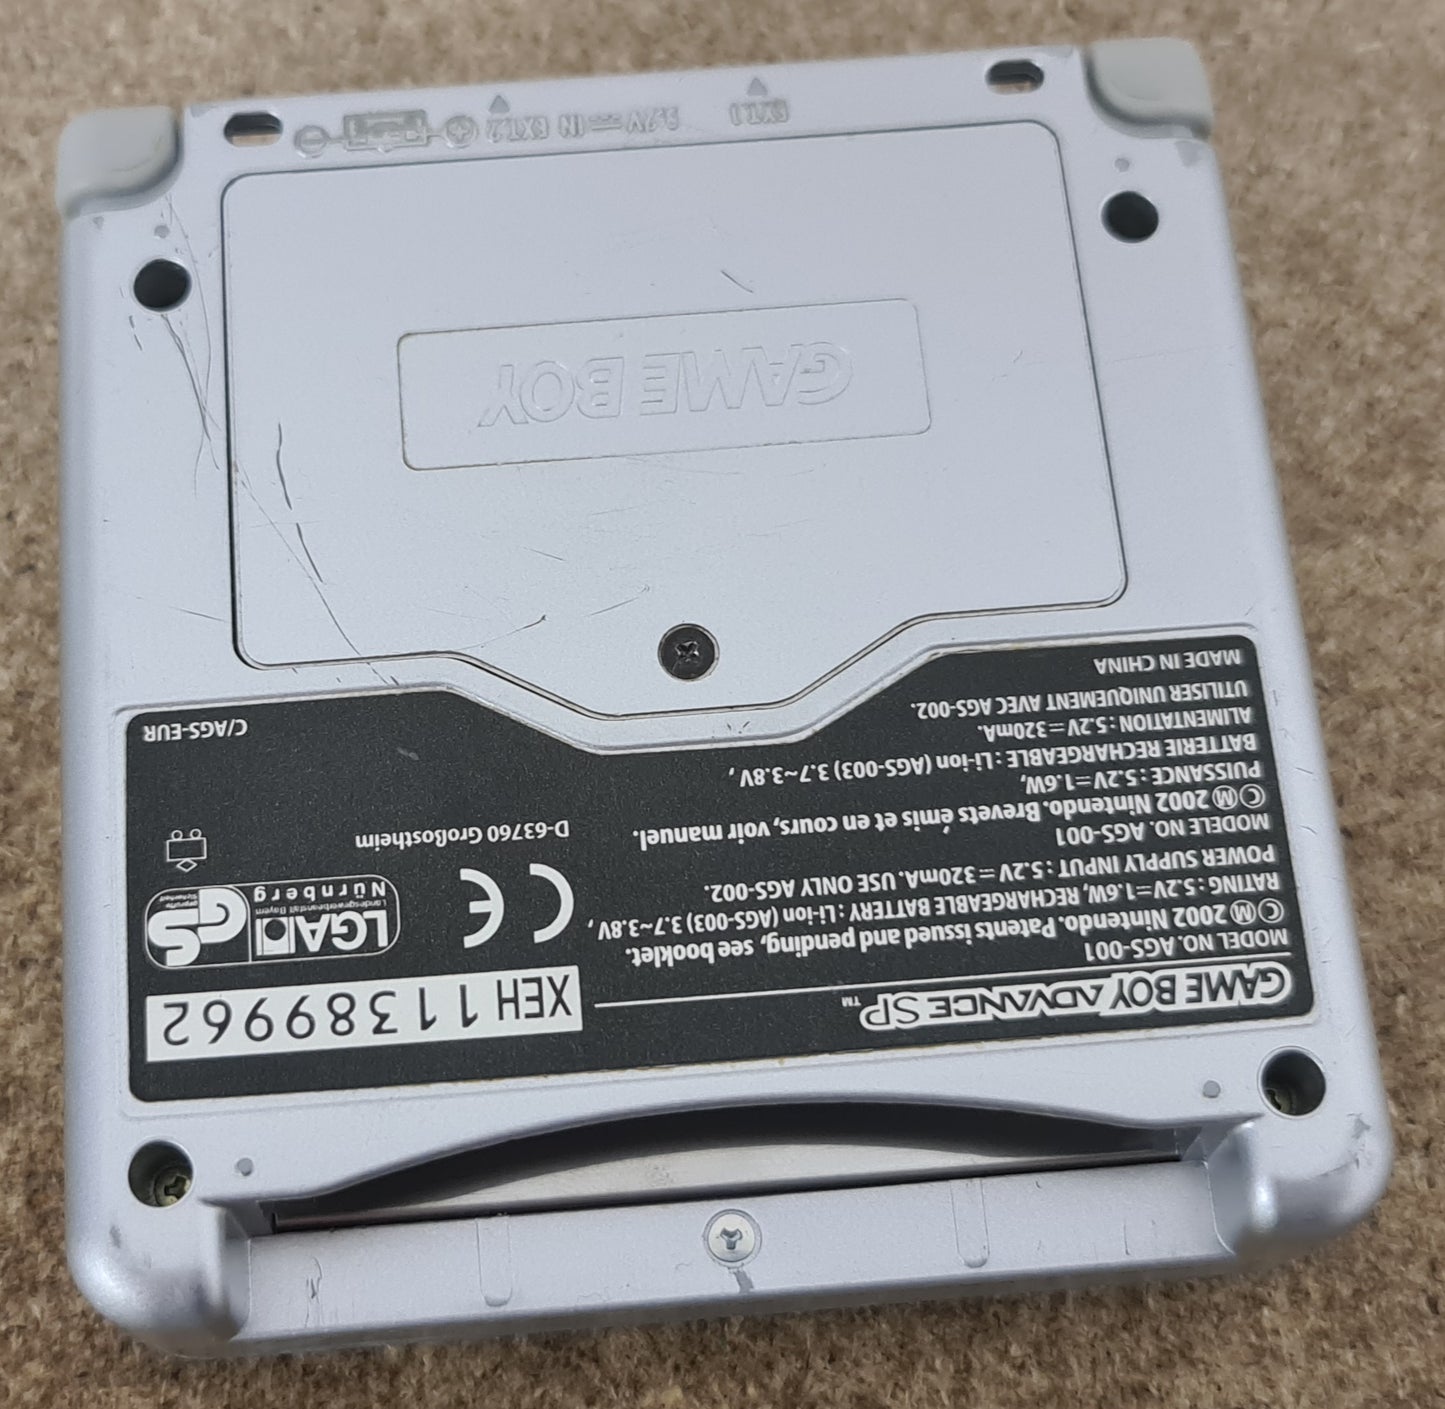 Game Boy Advance SP Silver Console